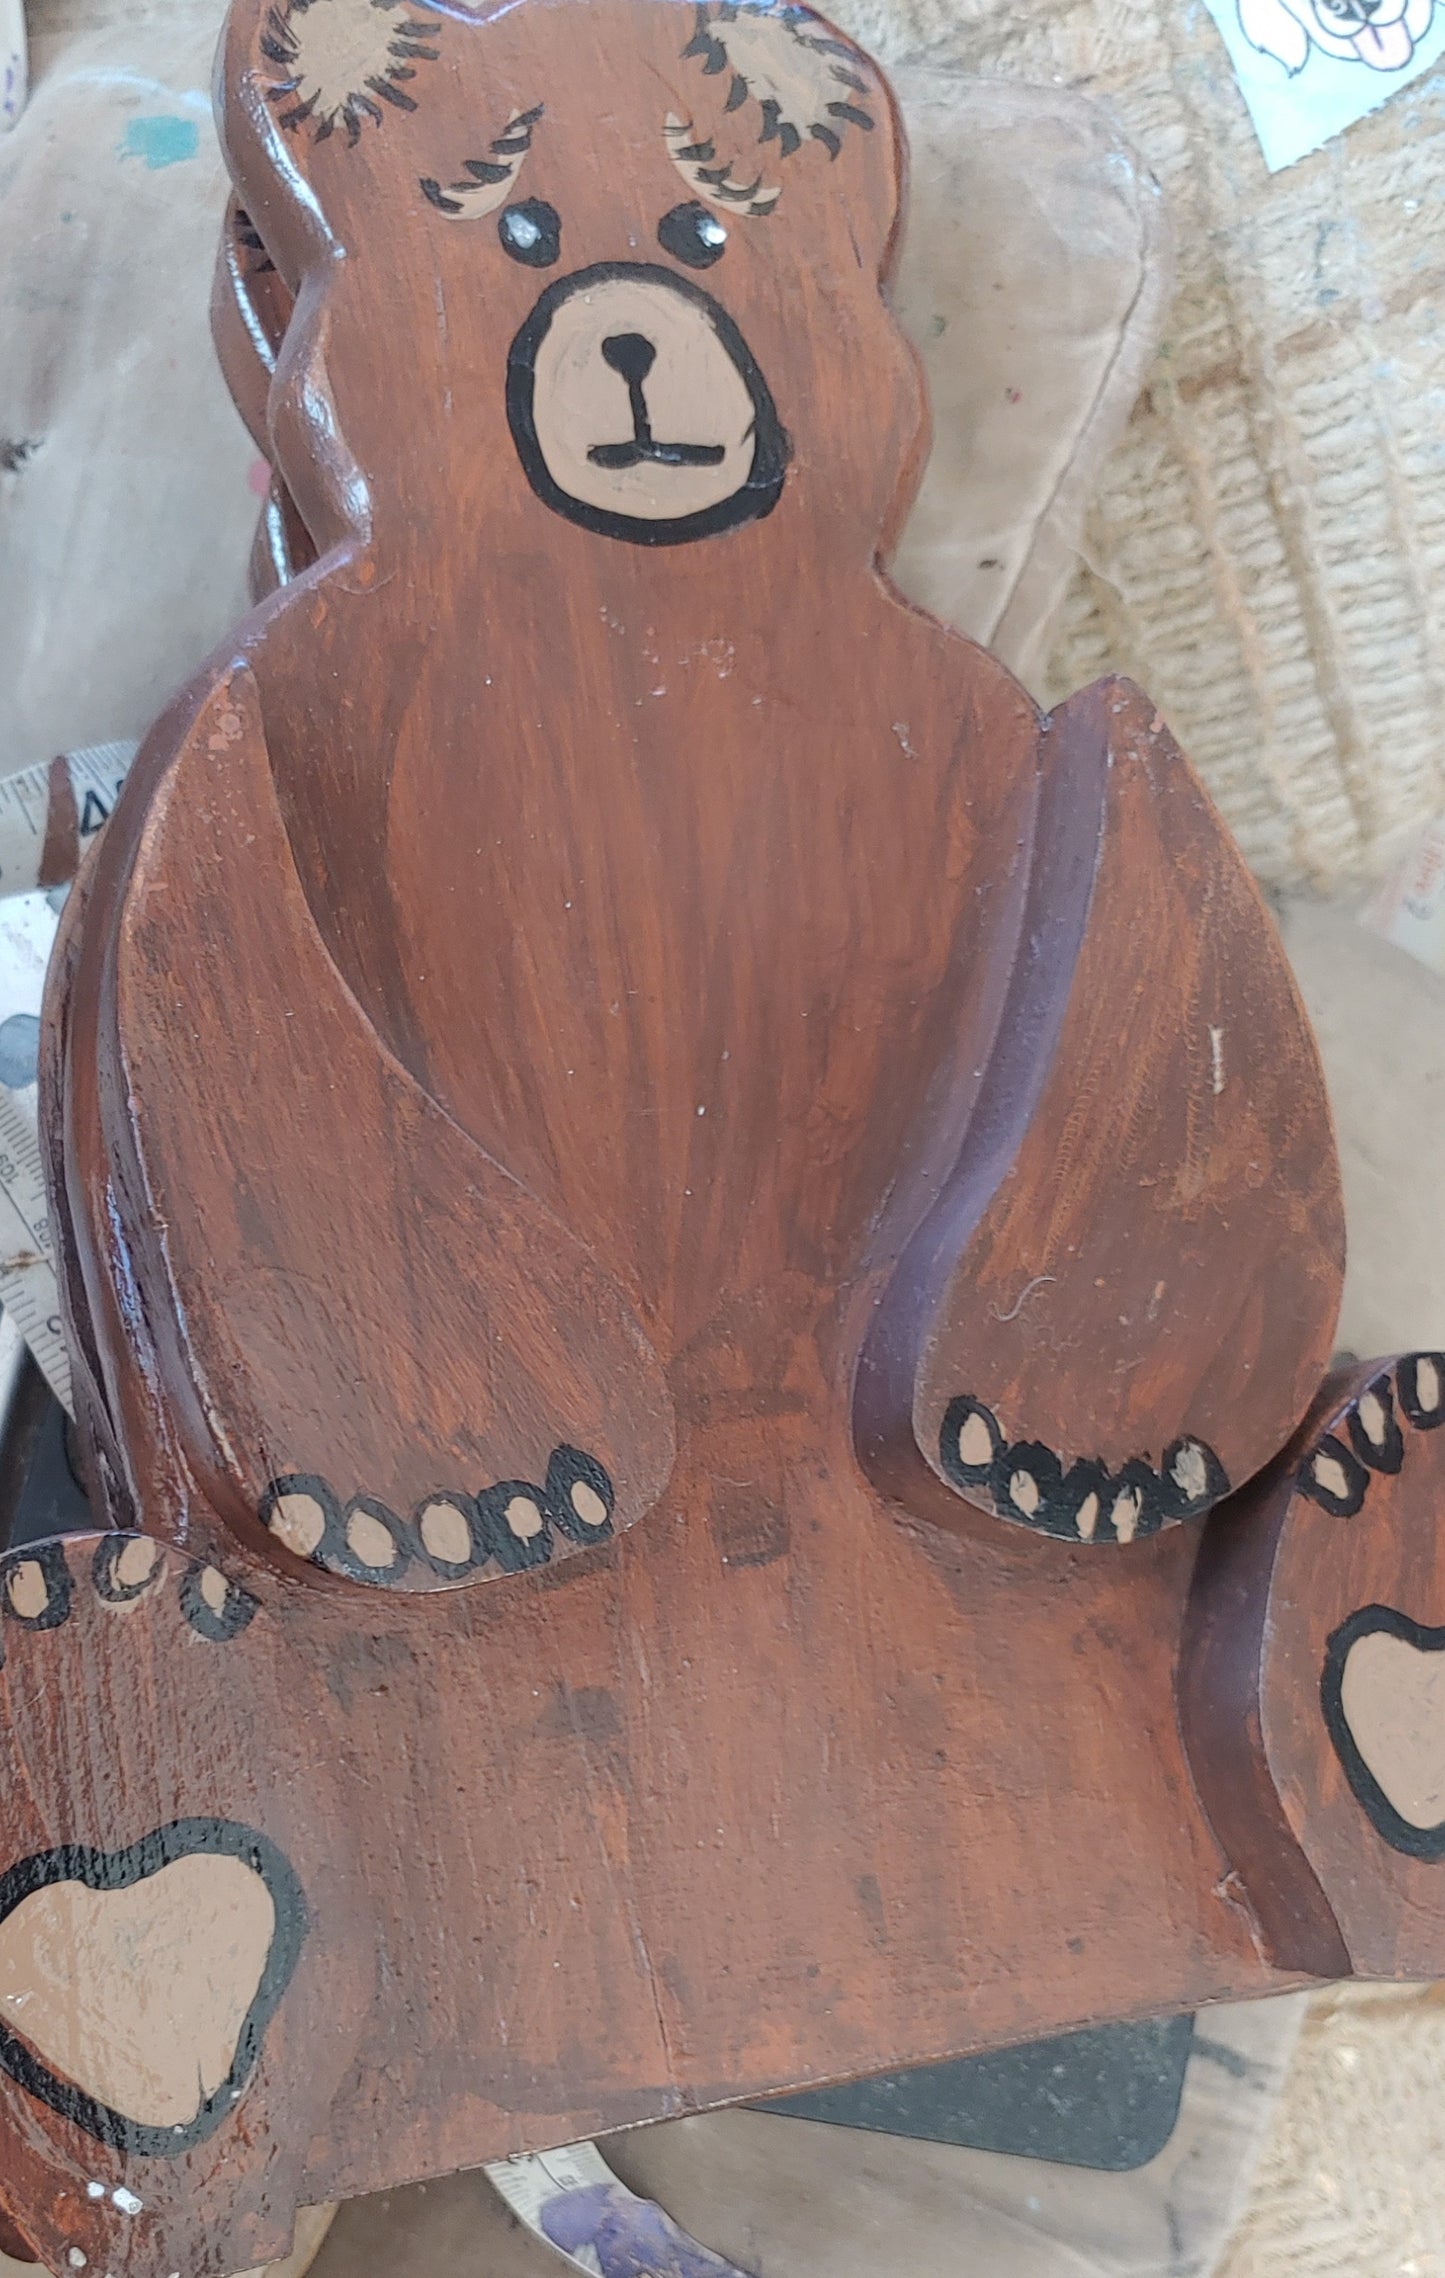 2 items handpainted wooden animal shape painting brown bears wall hanger or shelf sitter